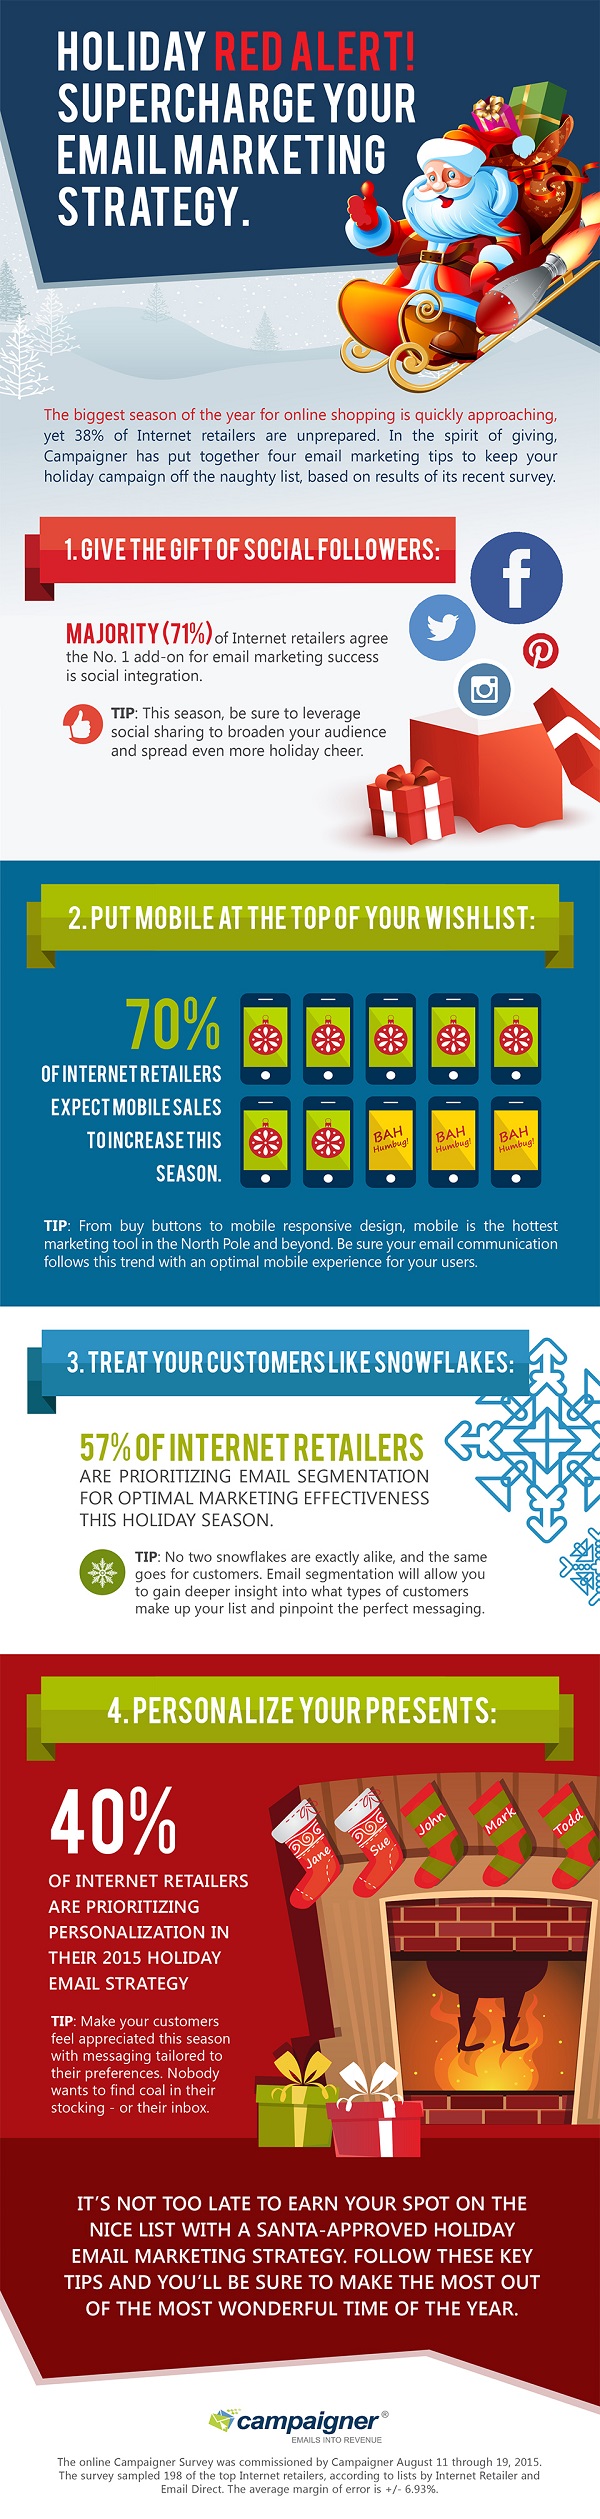 Internet-Retailer-Survey05